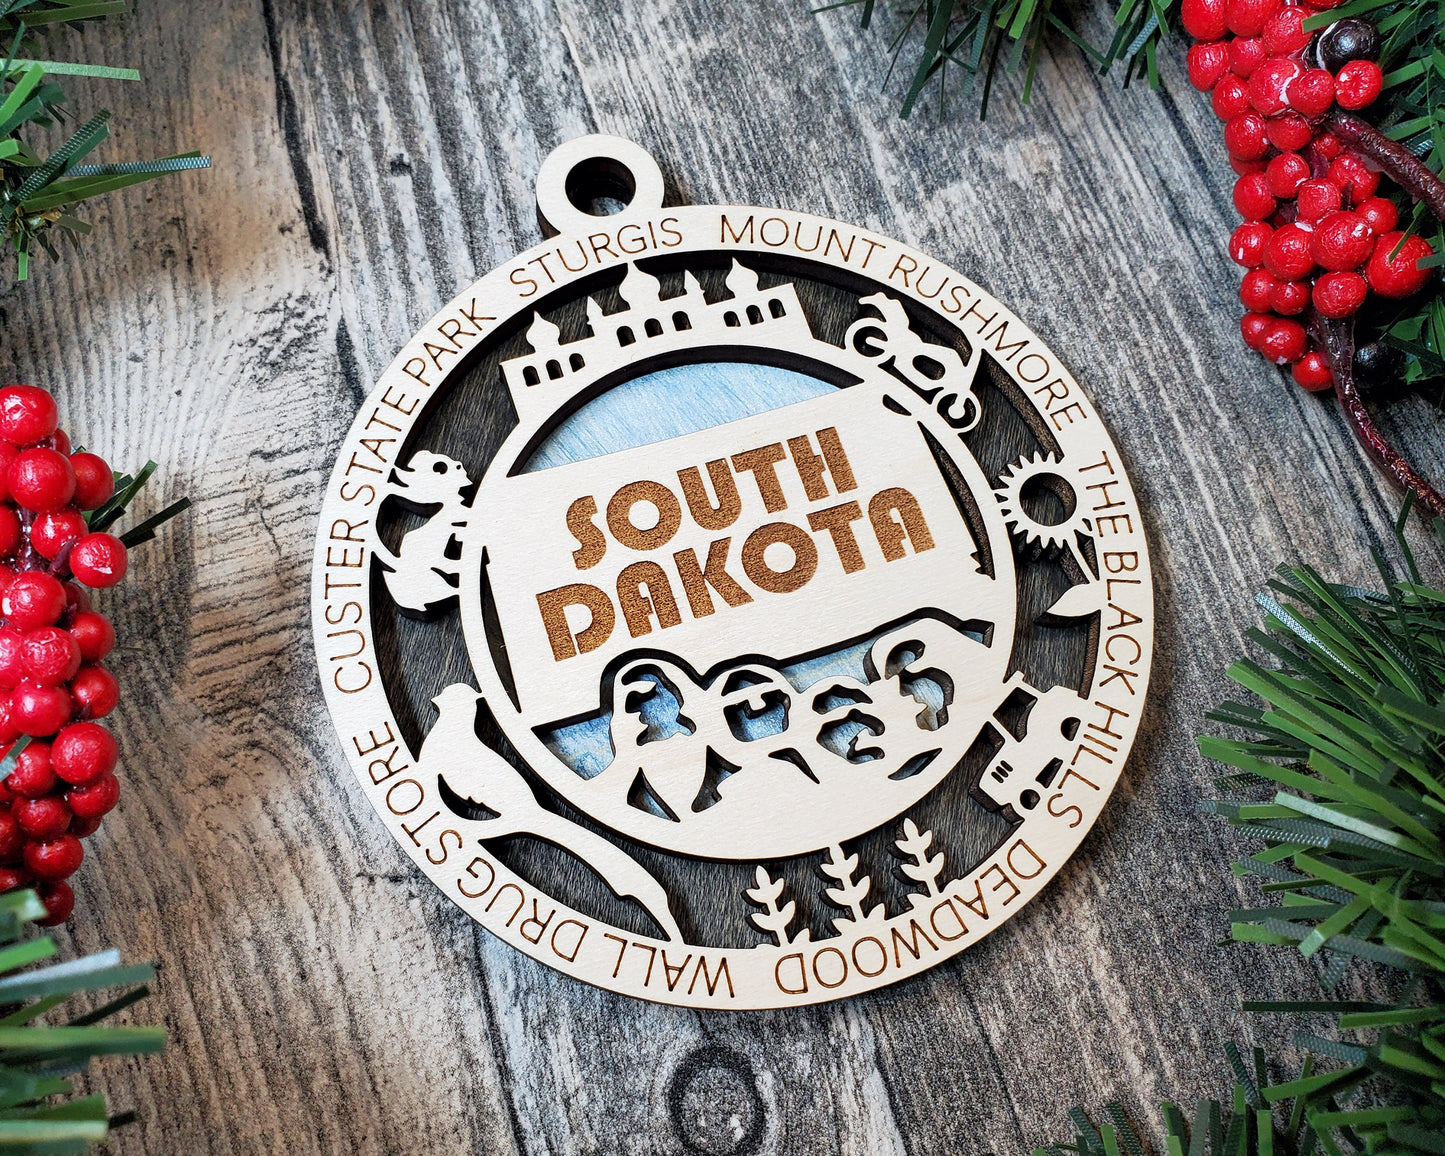 South Dakota State Ornament - SVG File Download - Sized for Glowforge - Laser Ready Digital Files